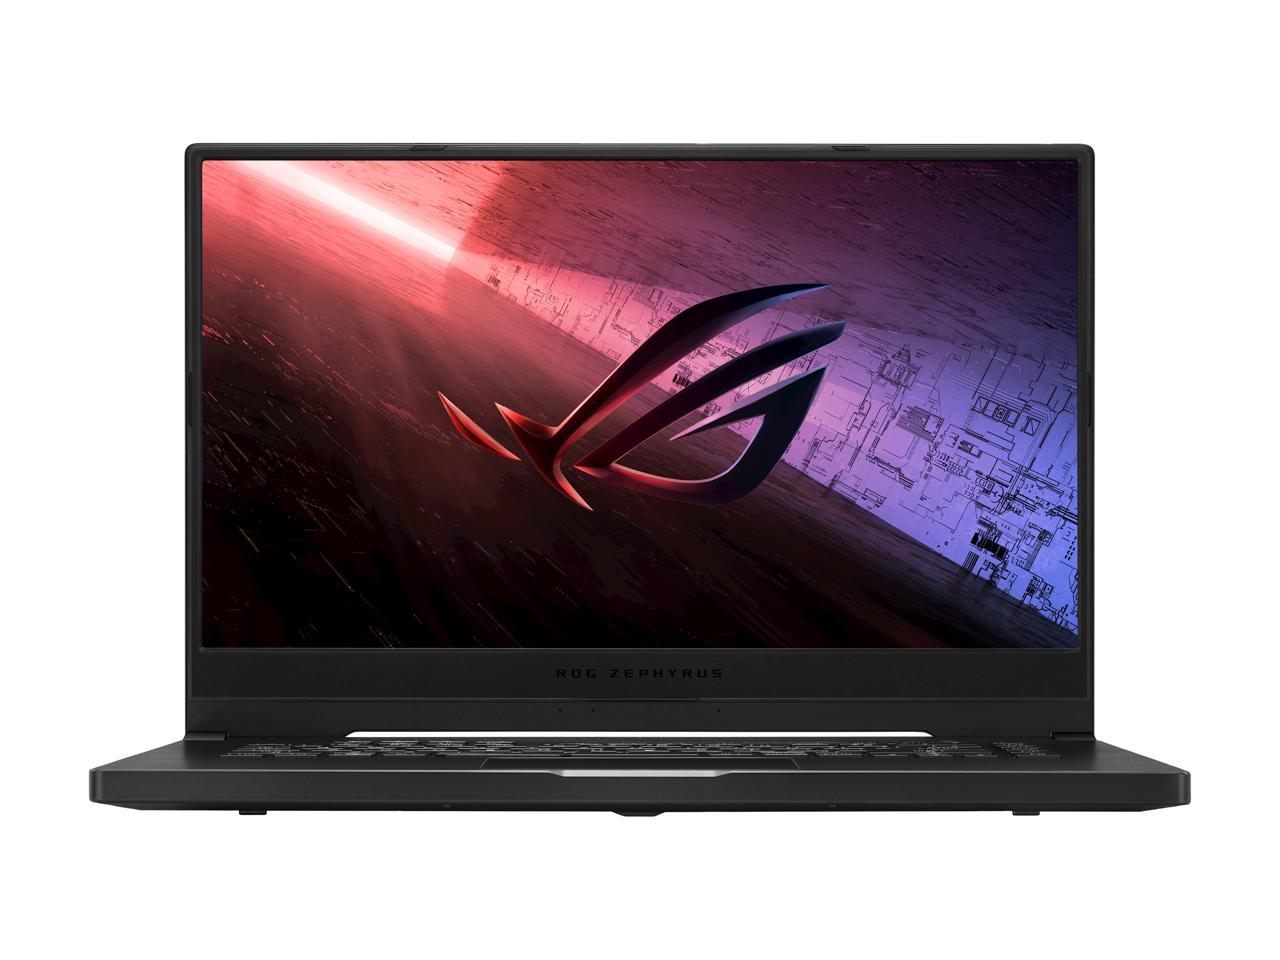 ROG Zephyrus G15 (2020) - 15.6" 144 Hz - GeForce GTX 1660 Ti - AMD Ryzen 7 4800HS - 16 GB DDR4 - 1 TB PCIe SSD - Windows 10 - Ultra Slim Gaming Laptop (GA502IU-ES76)